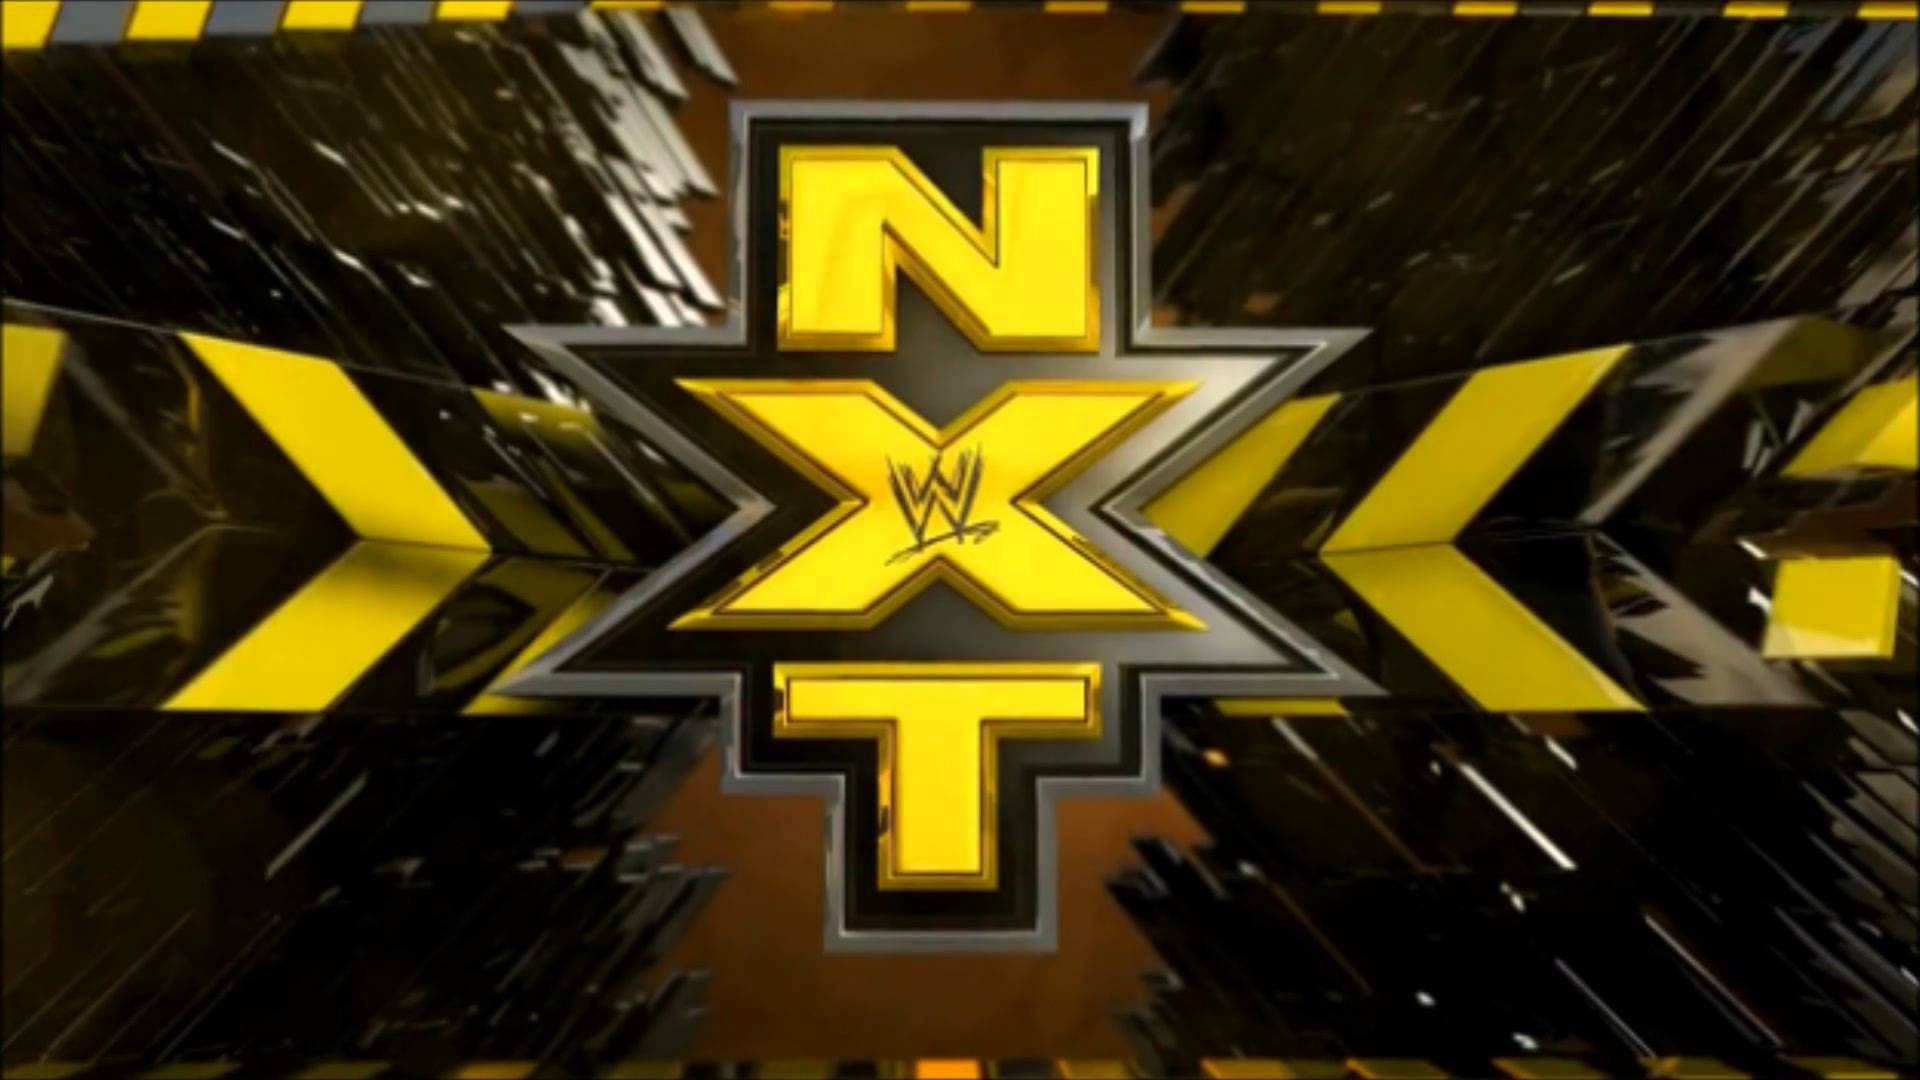 Intense WWE NXT Poster in Yellow Theme Wallpaper